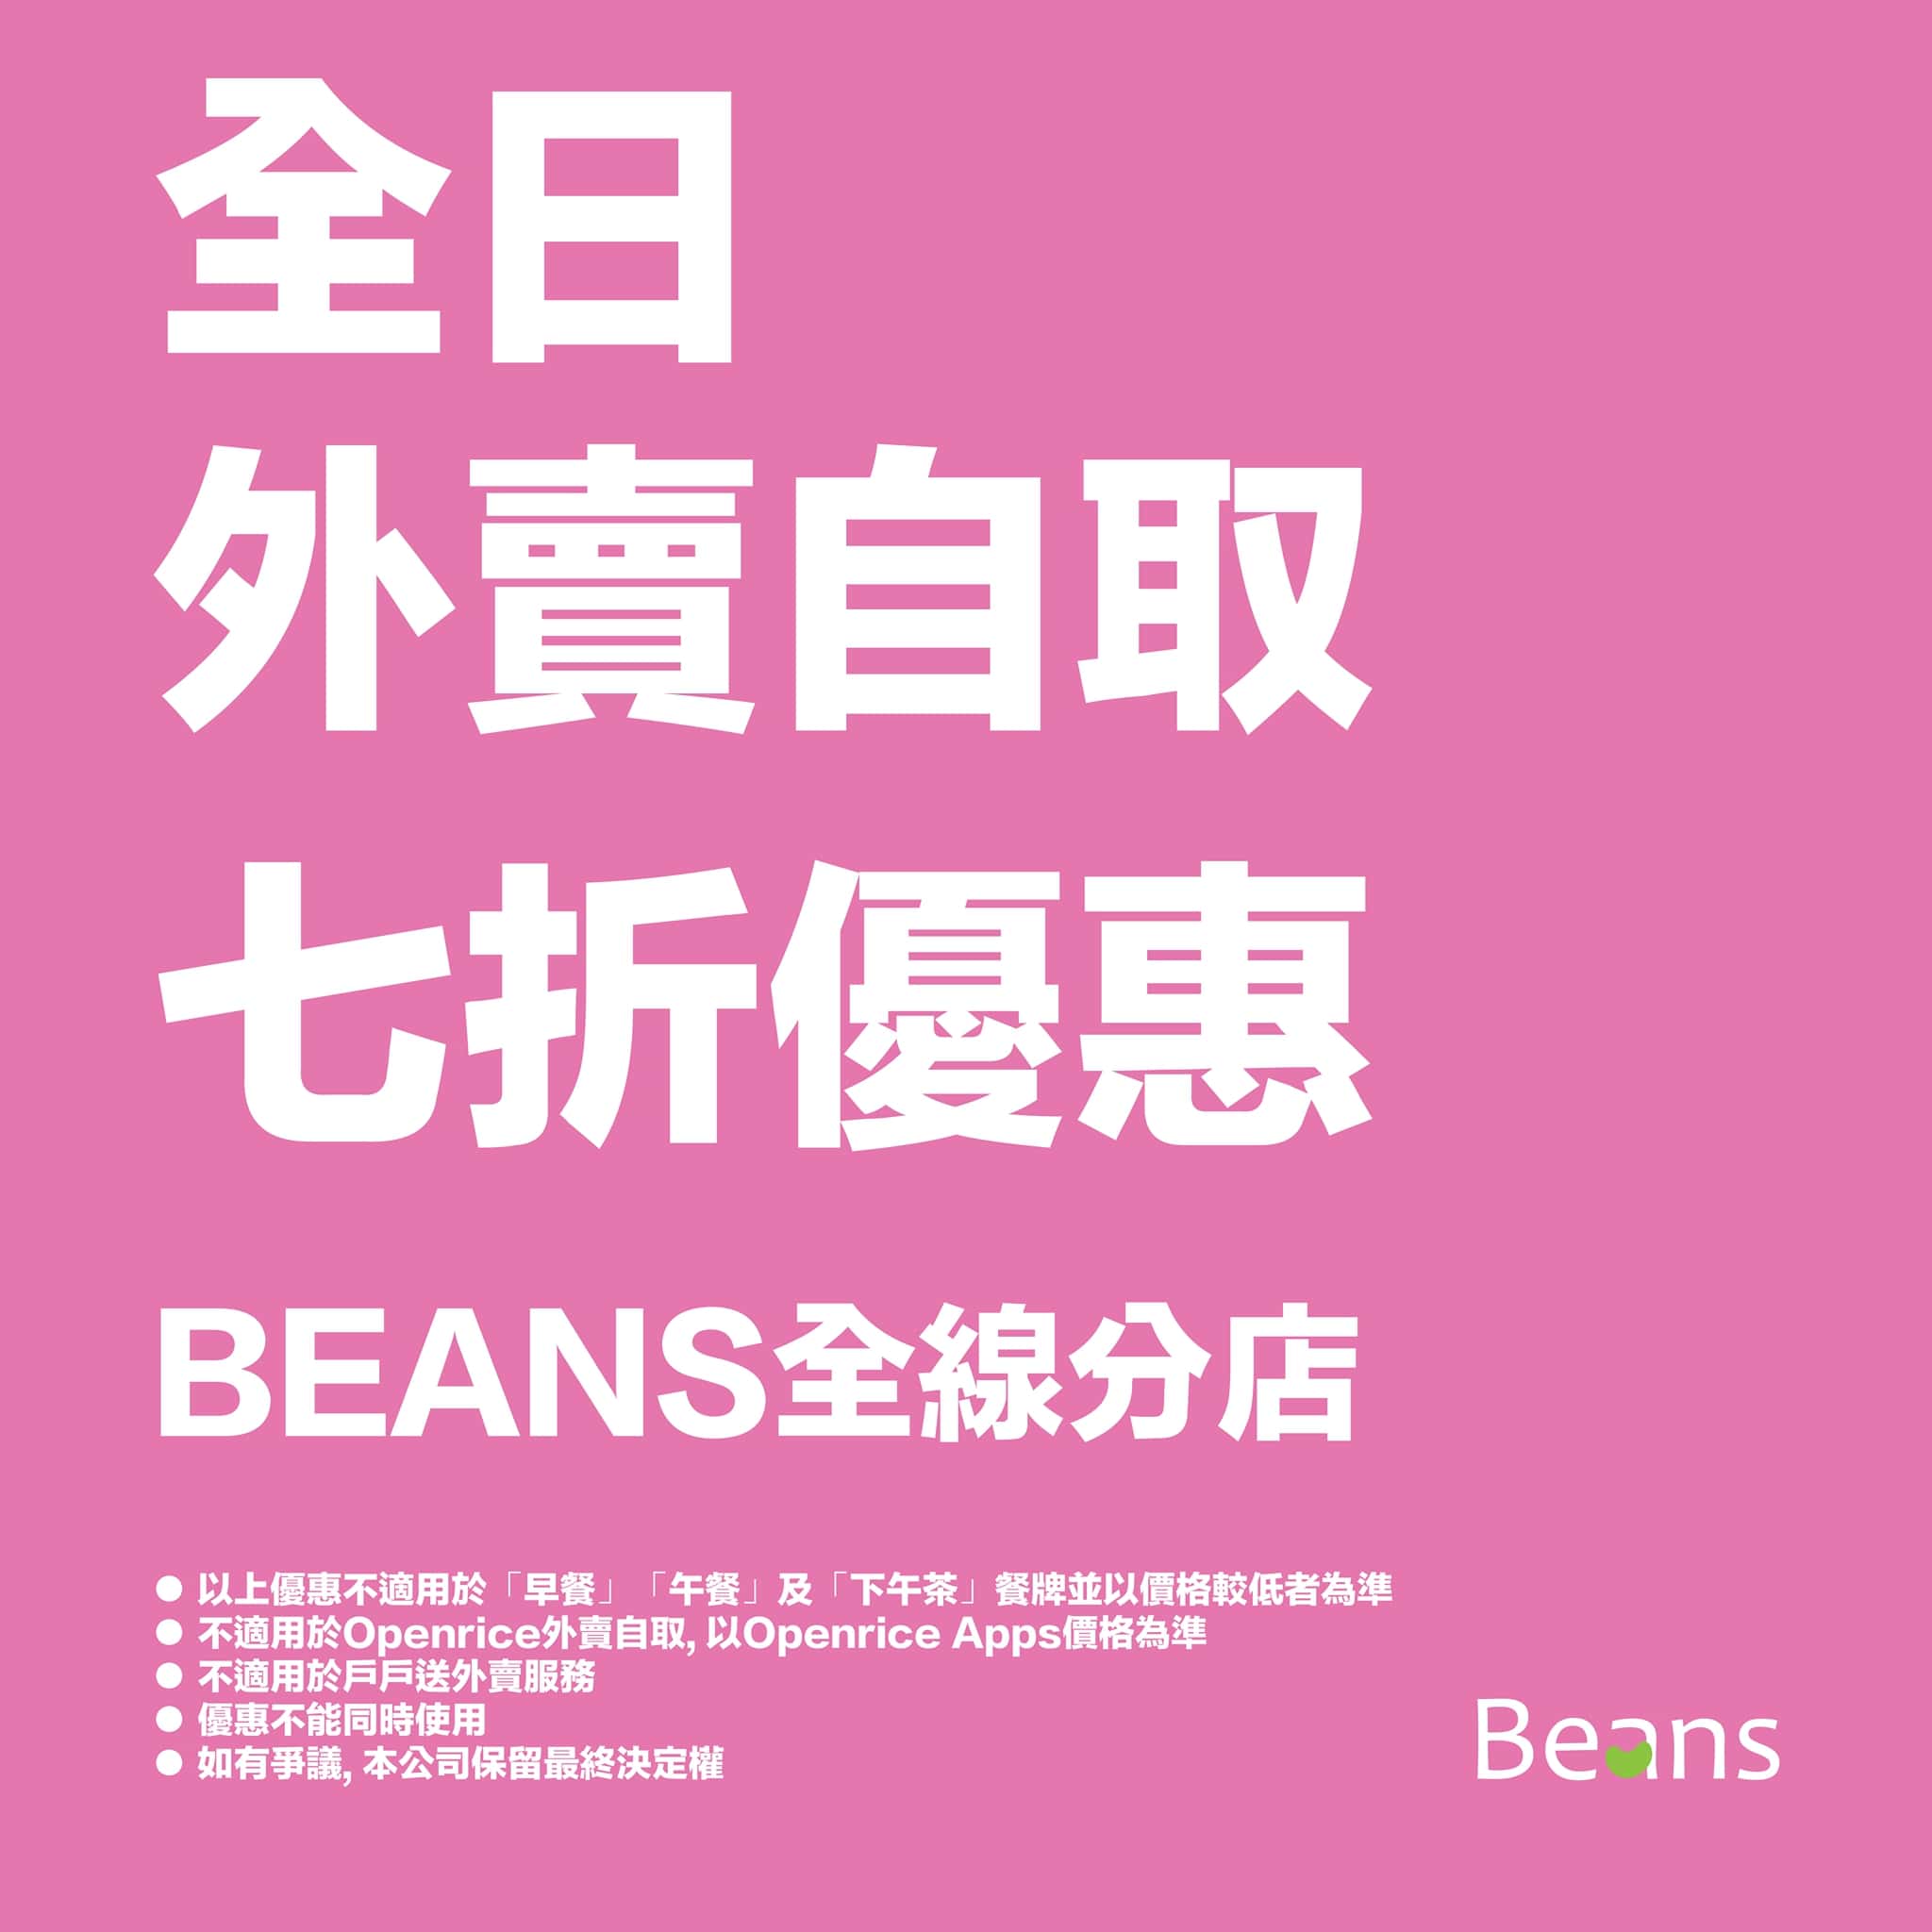 BEANS Coffee 全線分店所有食物飲料 全日外賣自取 7 折